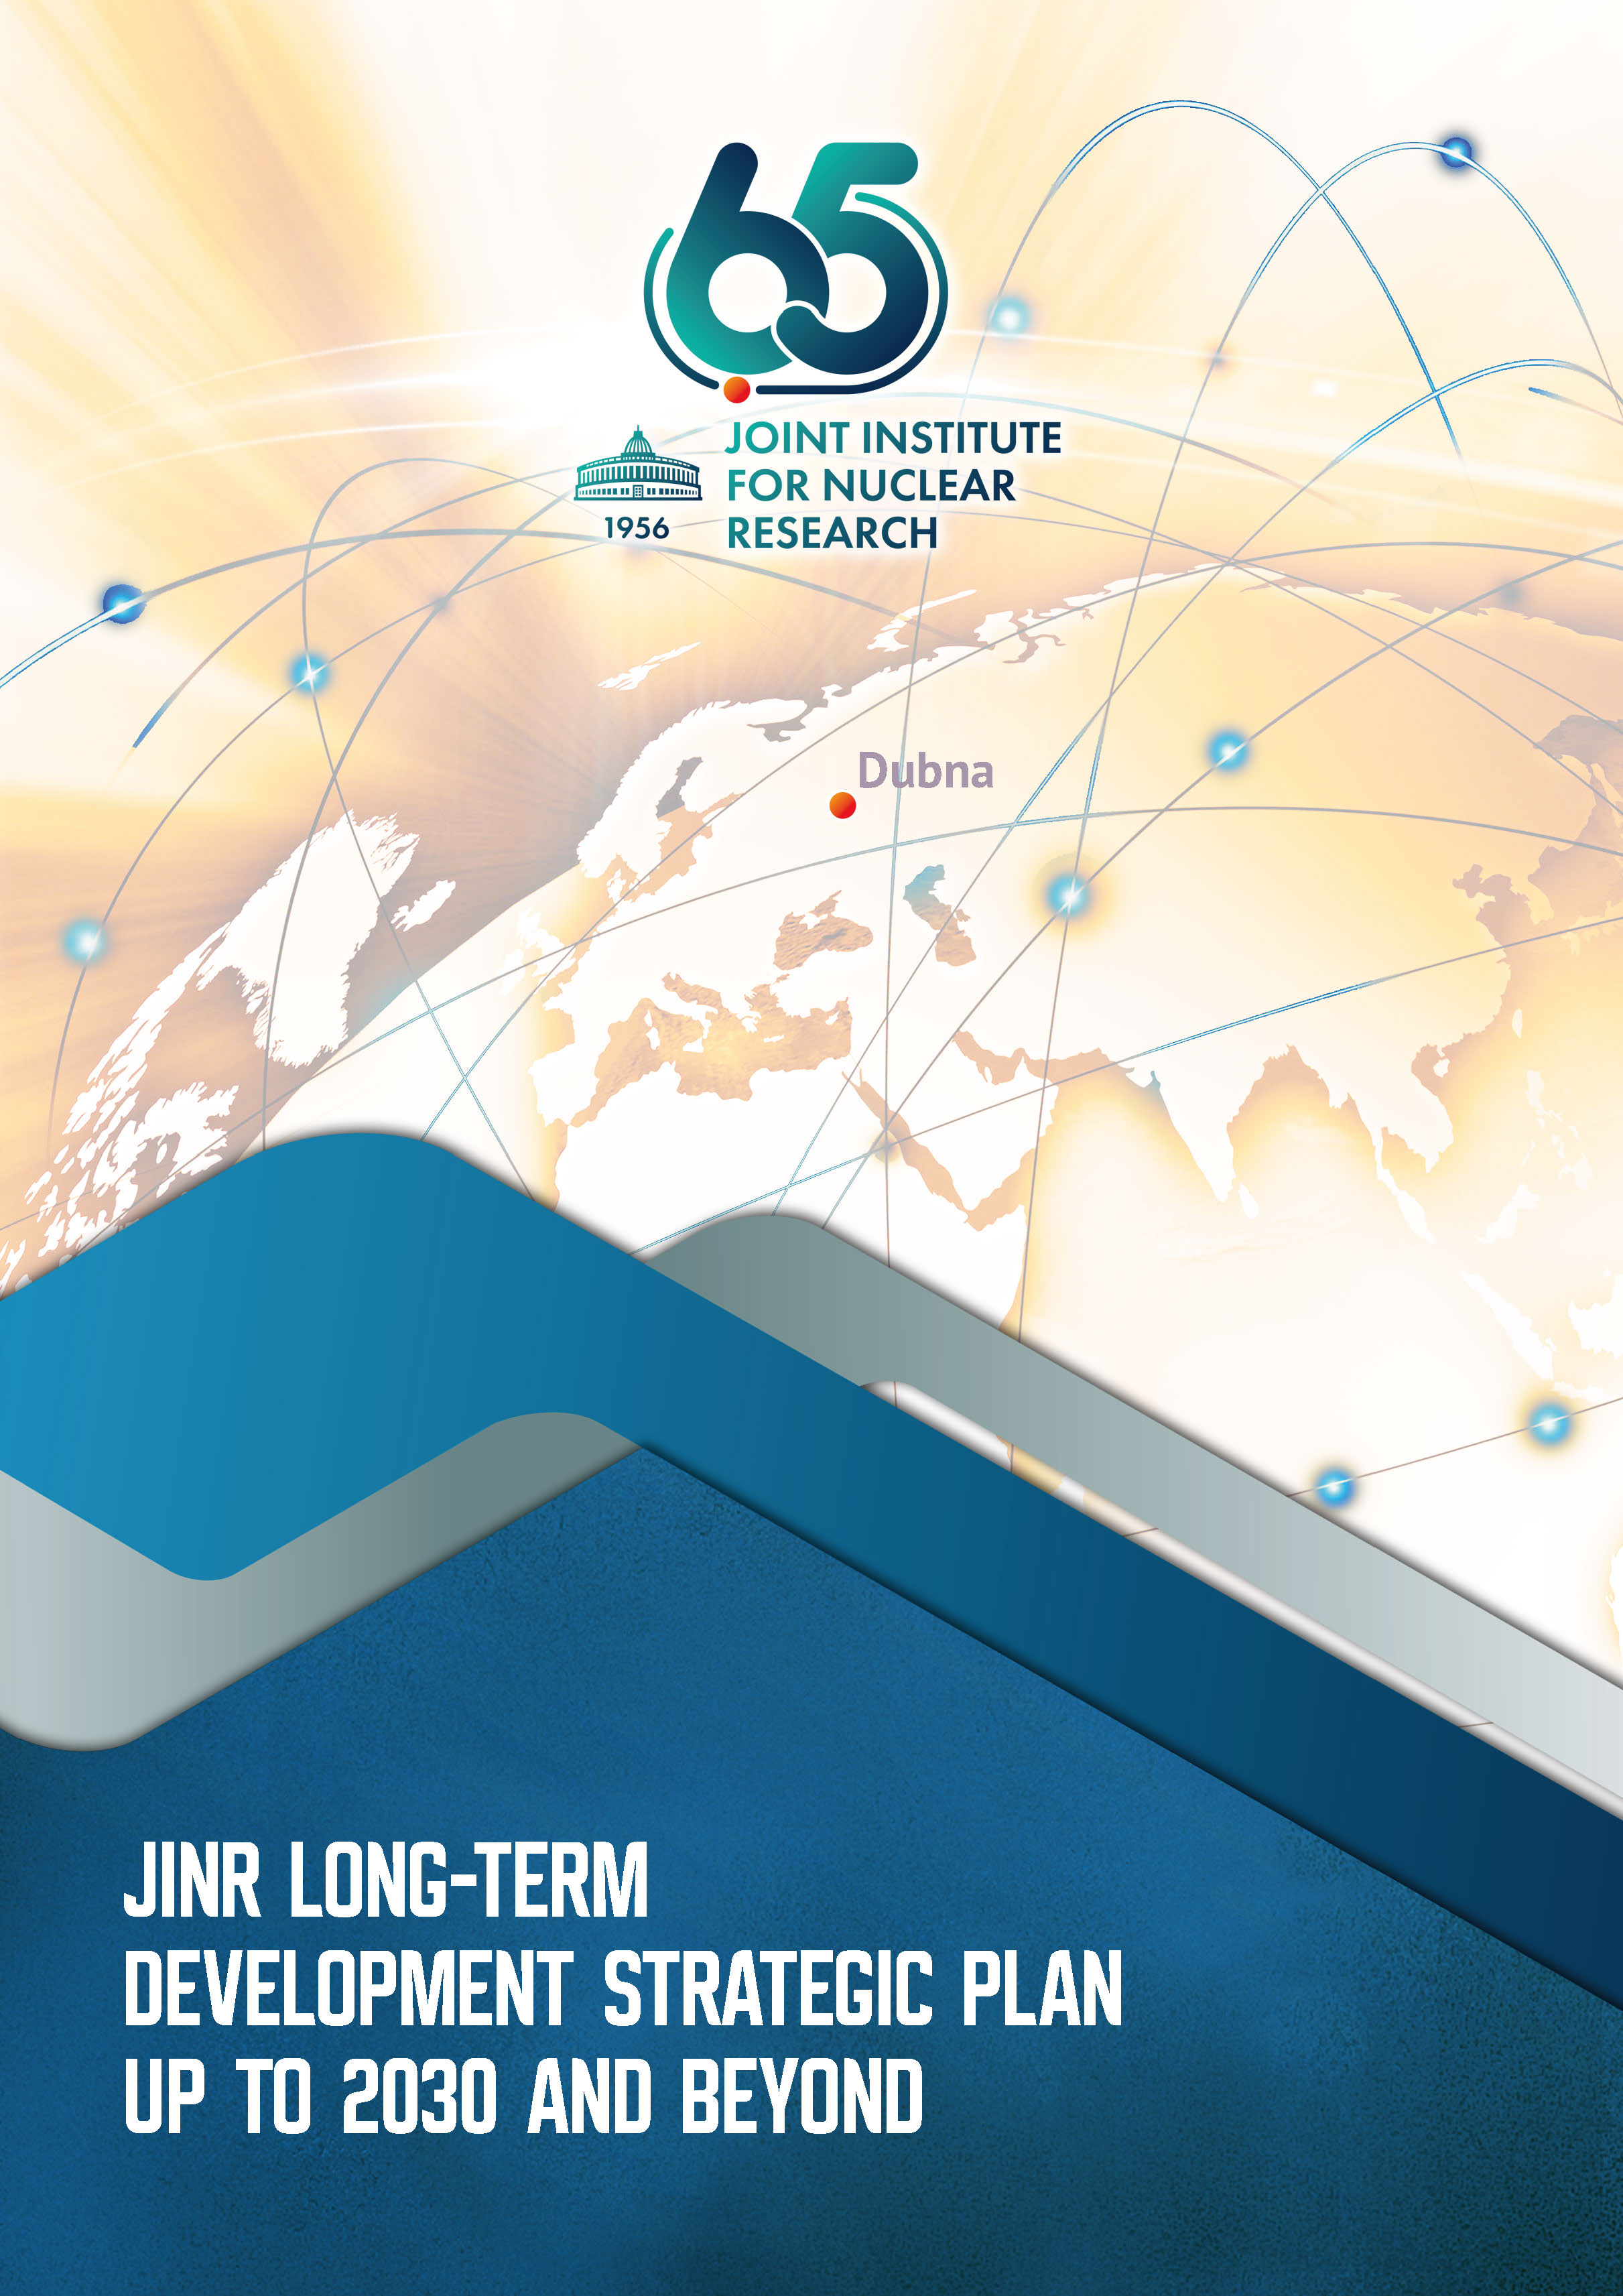 JINR Long-Term Development Strategic Plan up to 2030 and beyond